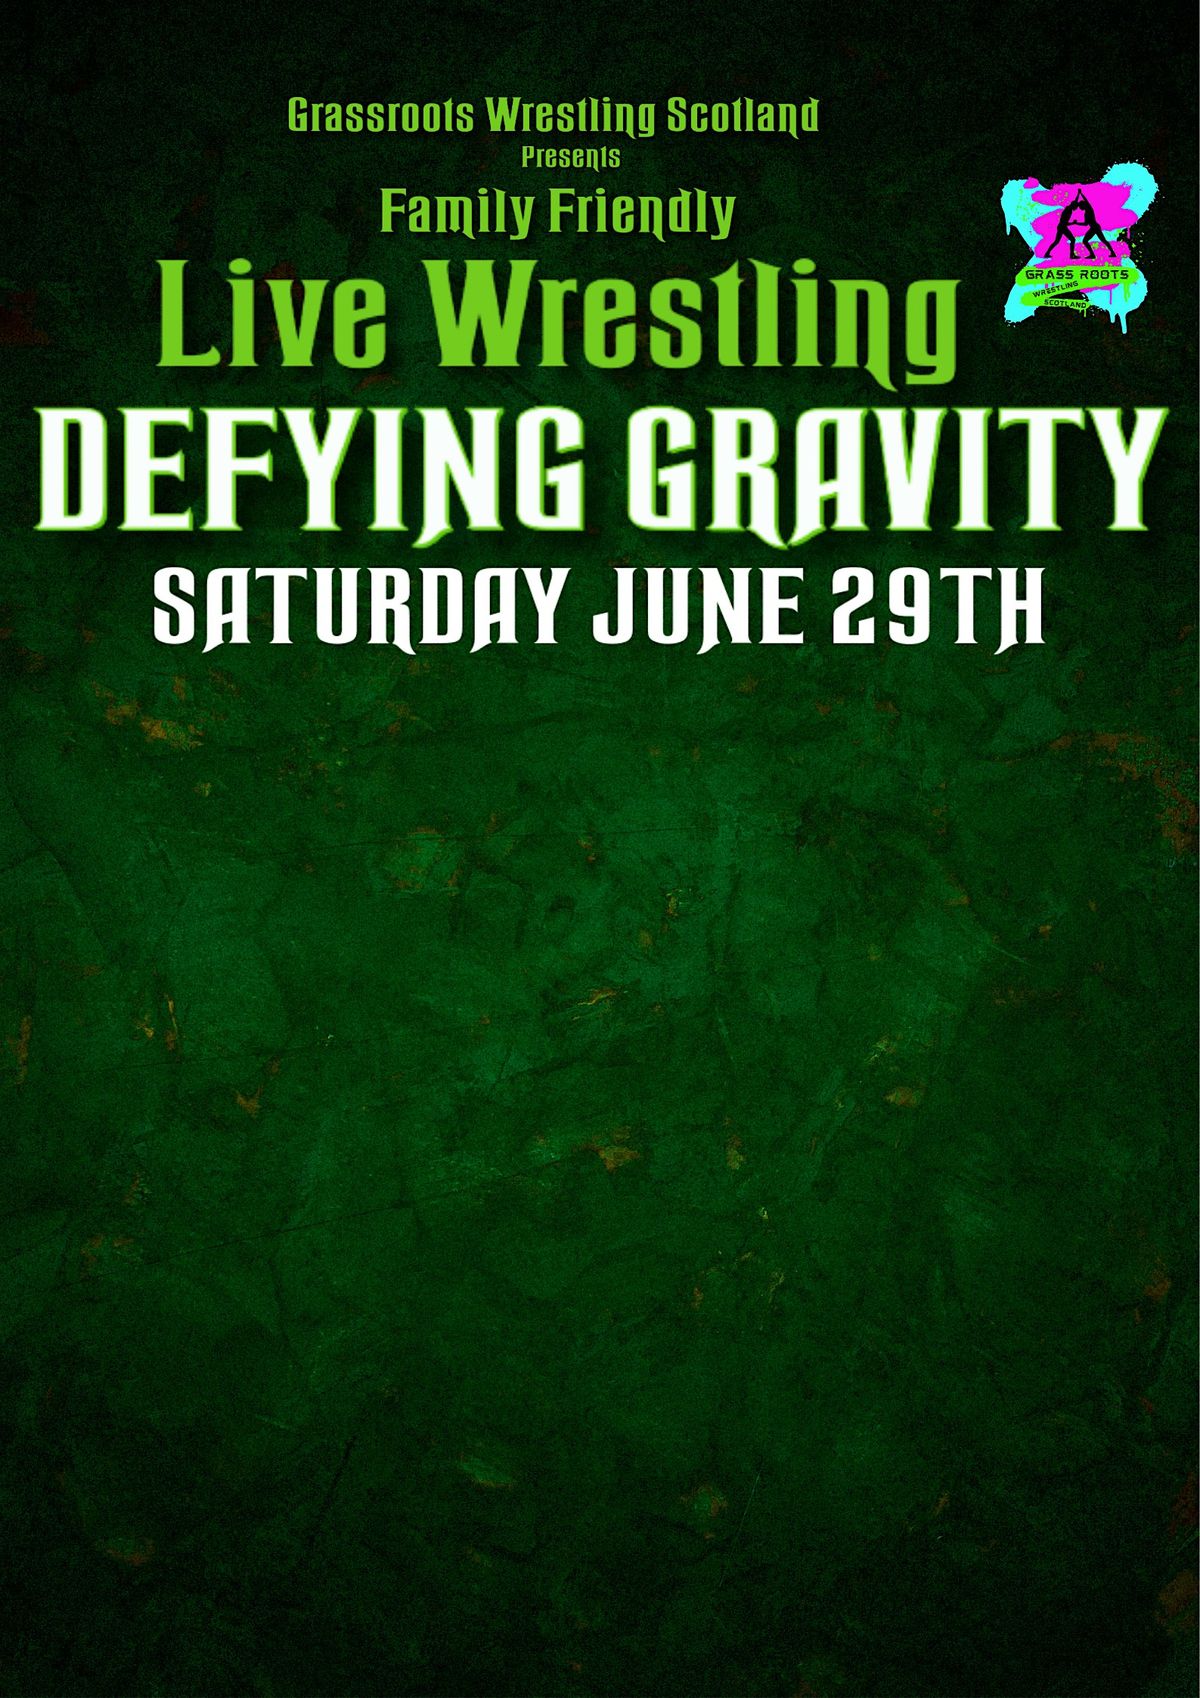 Family Friendly Live Wrestling - Defying Gravity